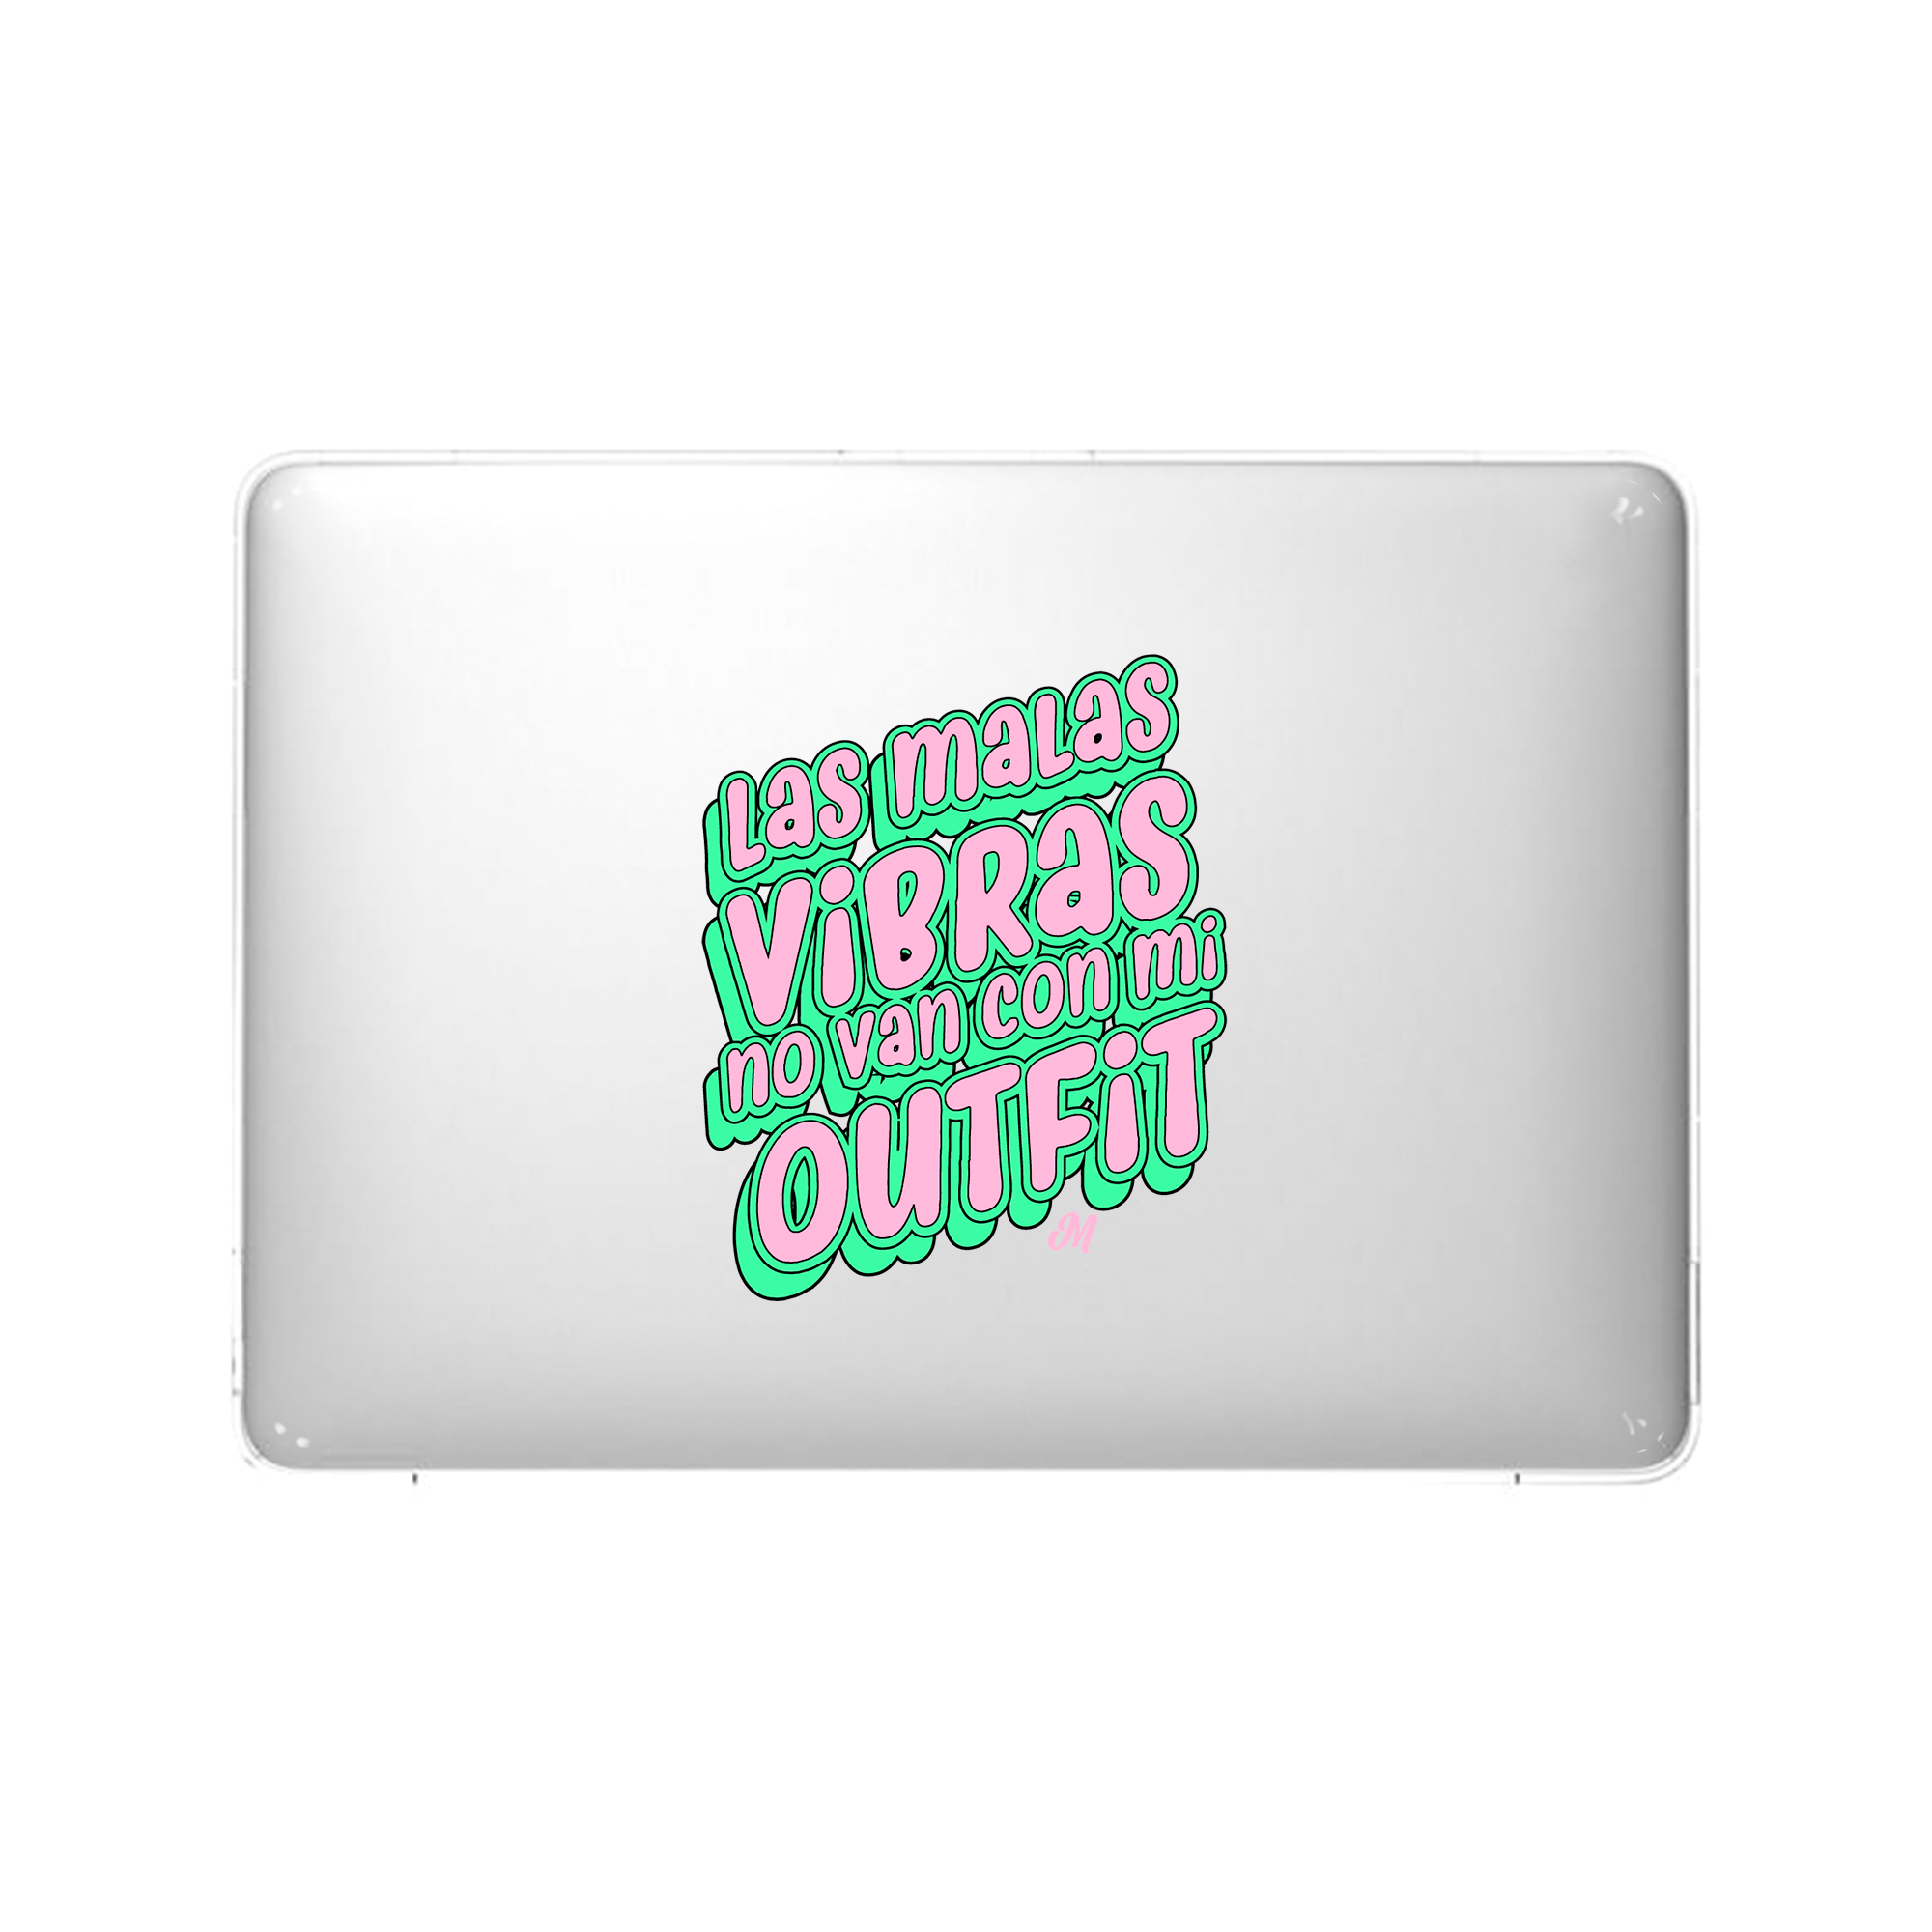 Vibras MacBook Case - Mandala Cases